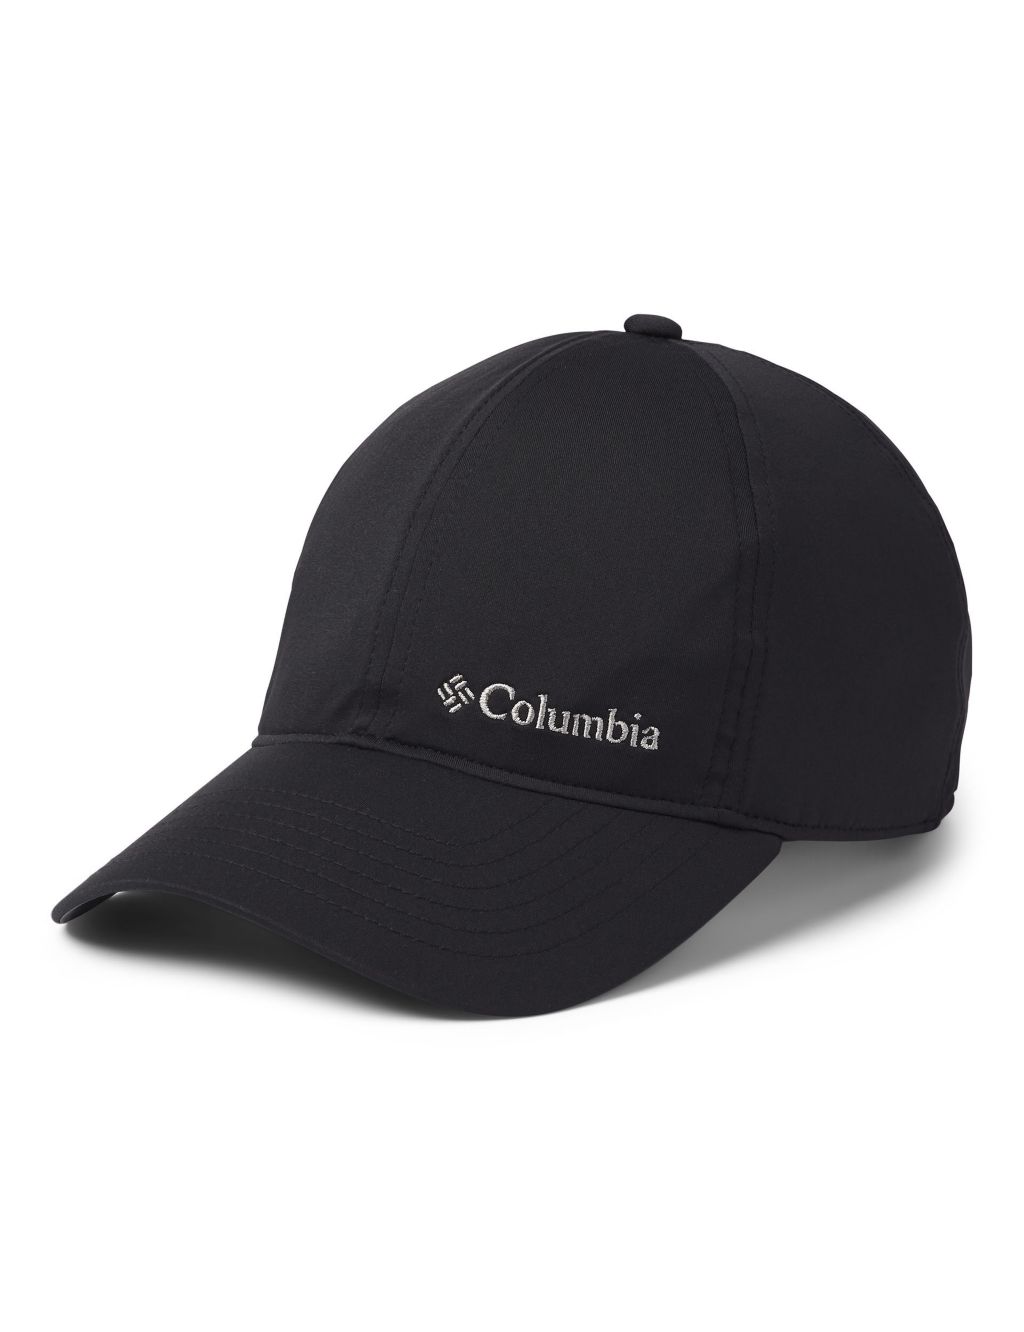 Coolhead™ II Baseball Cap